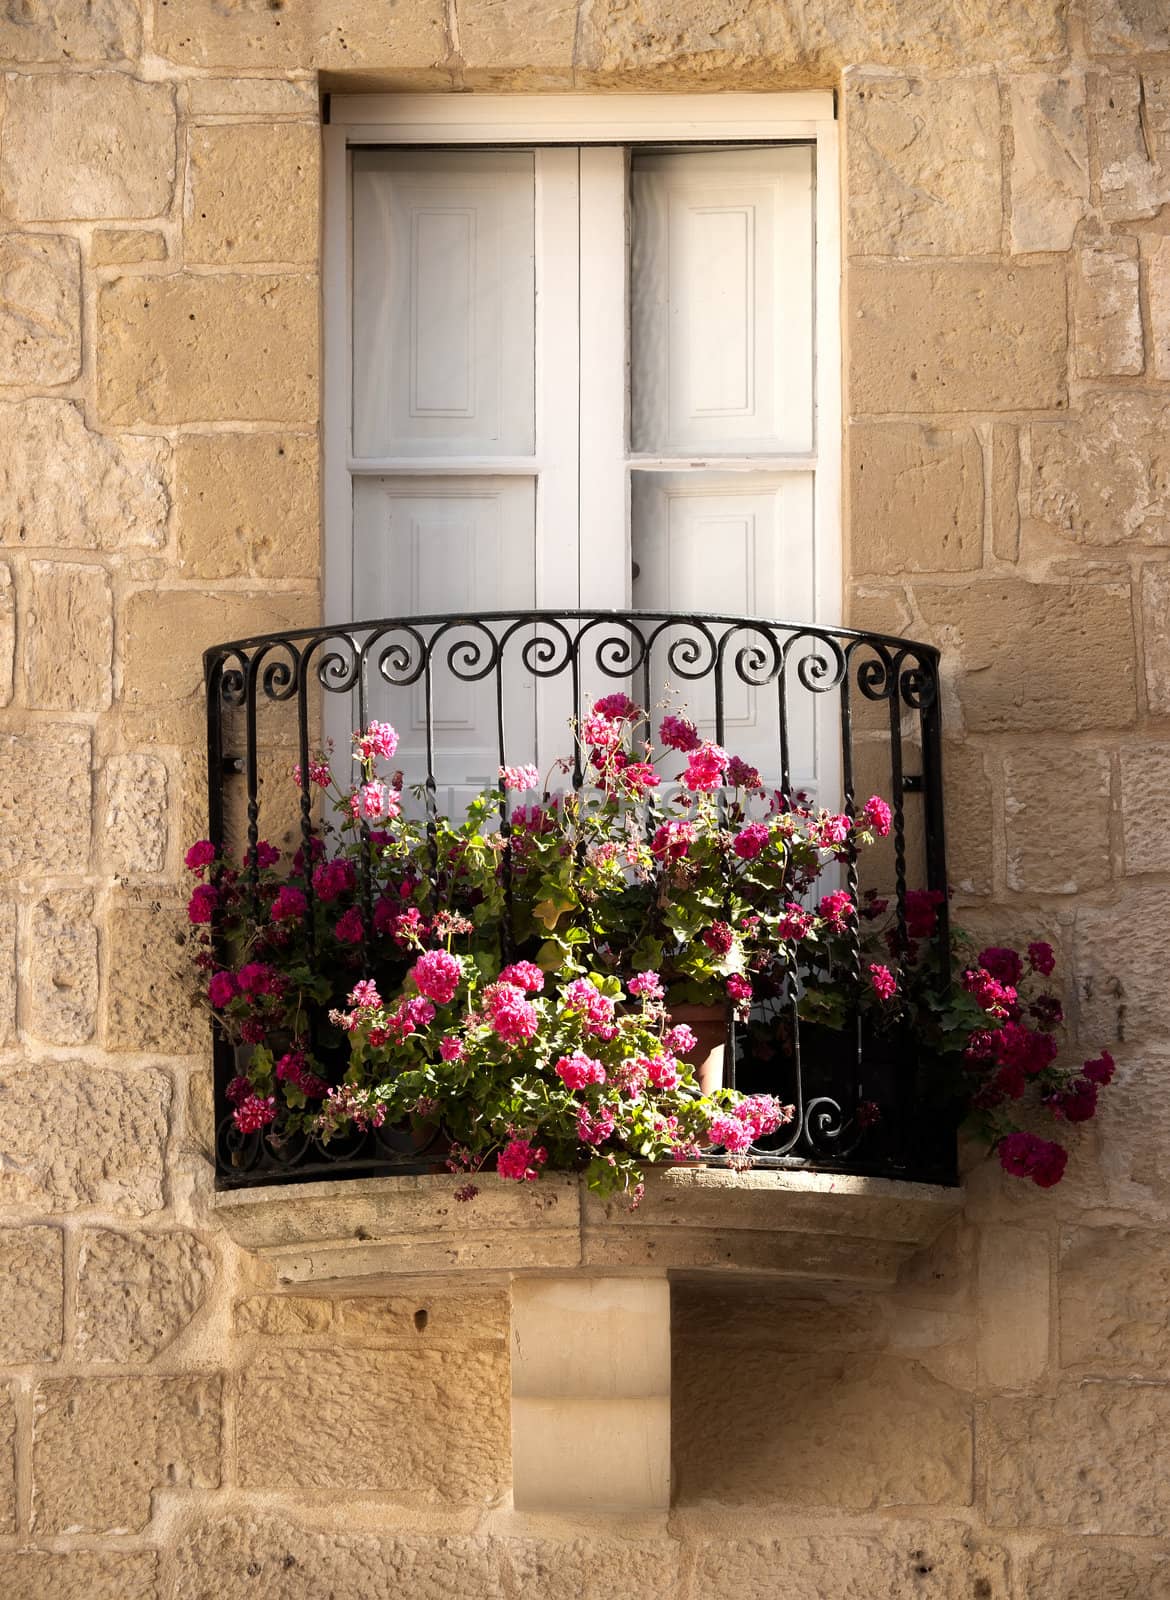 A quaint little balcony in the city of Mdina in Malta